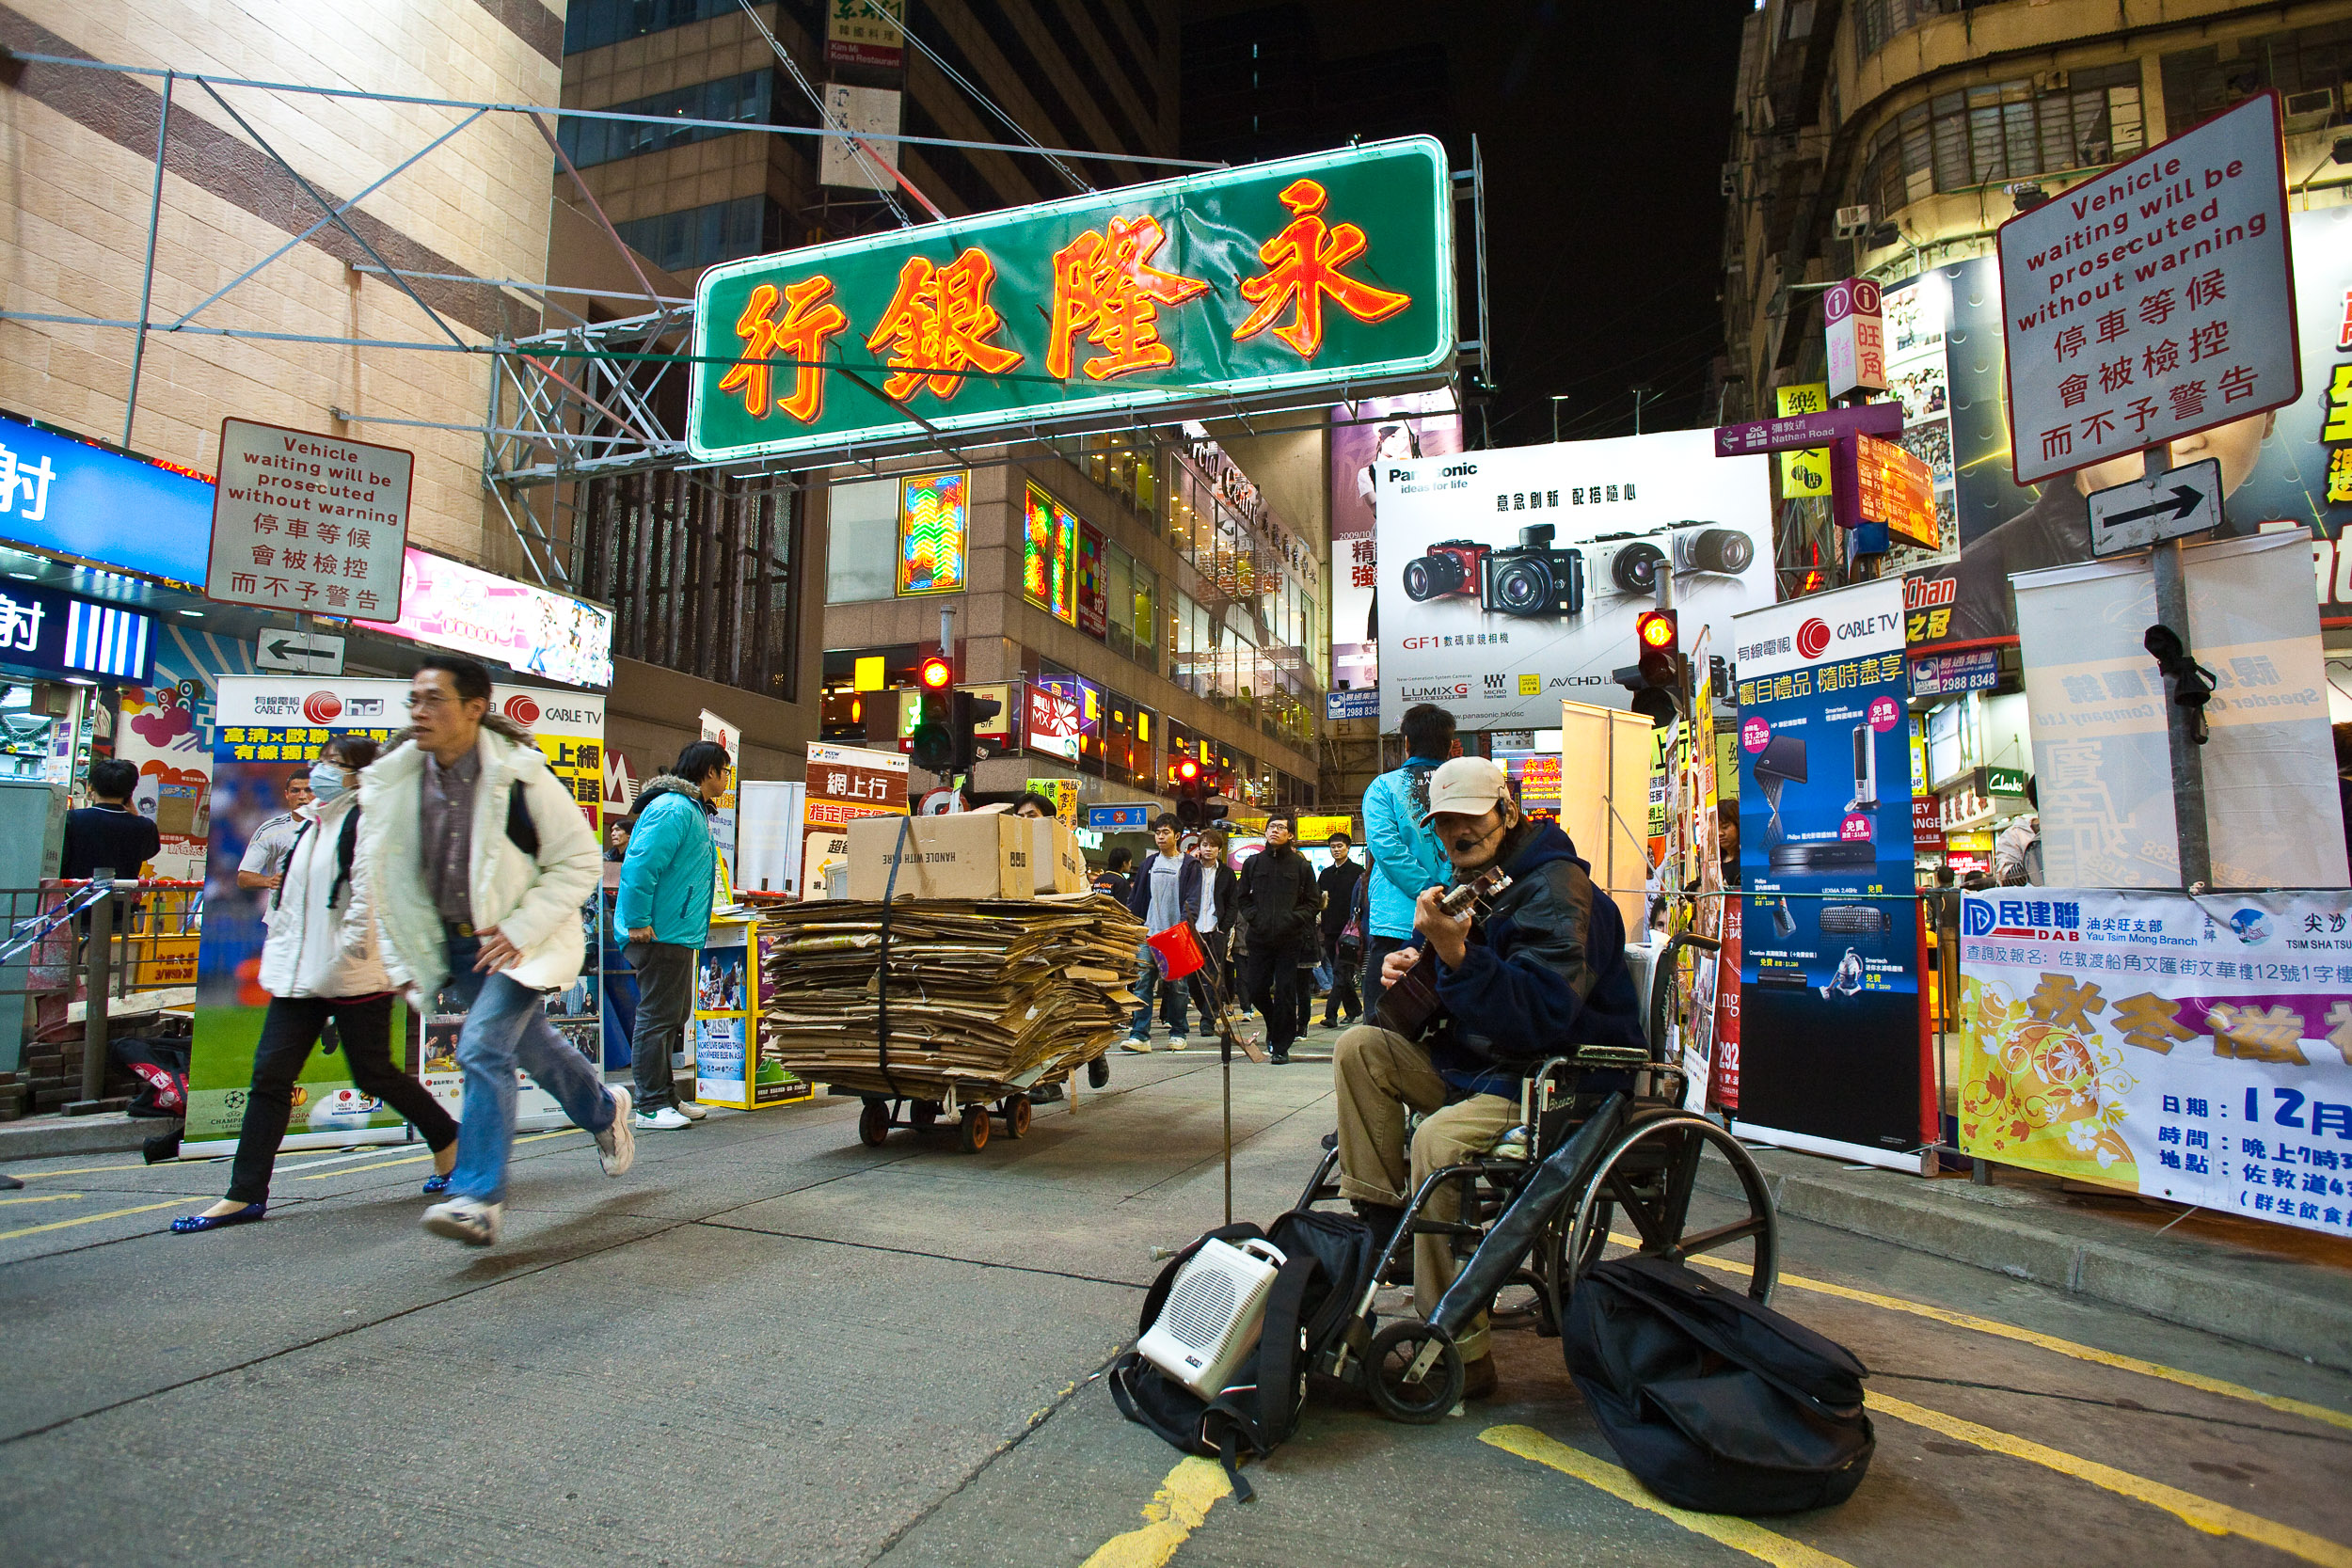  A street scene in Hong Kong Dec. 16, 2009 